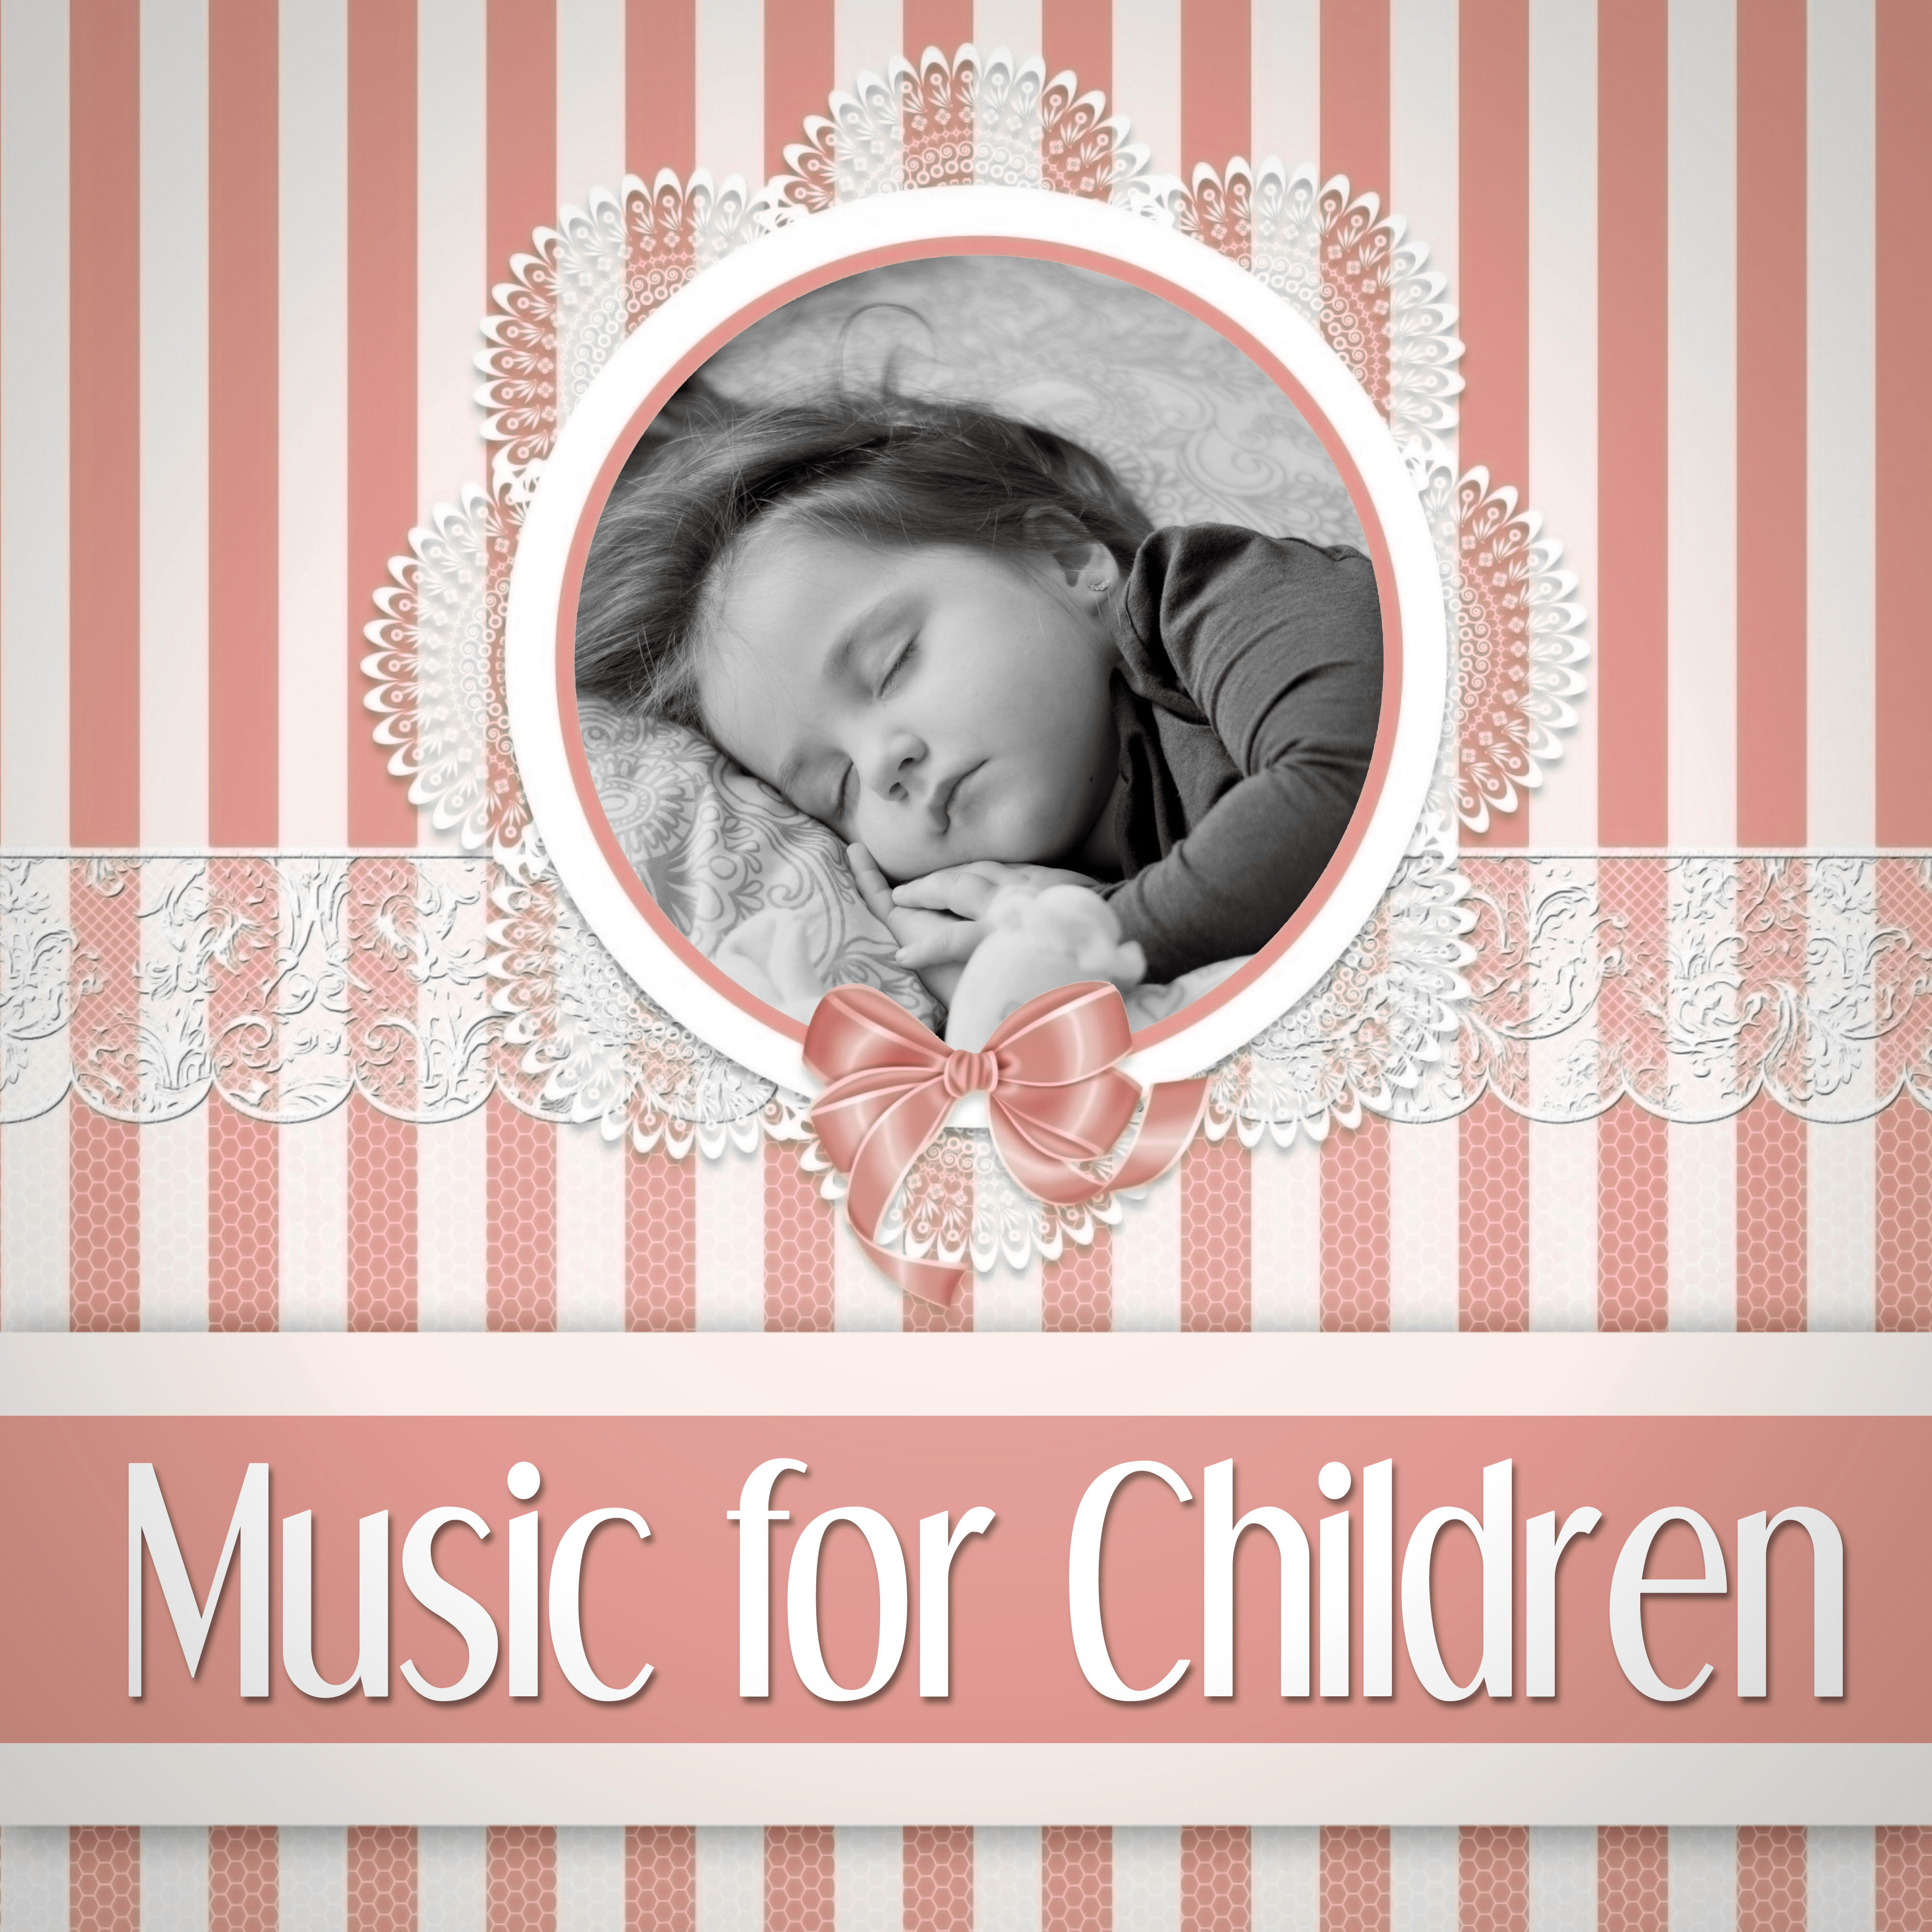 Music for Children - Favorites Instrumental Piano Music for Sleep, Lullabies, Baby Music, Happy Child